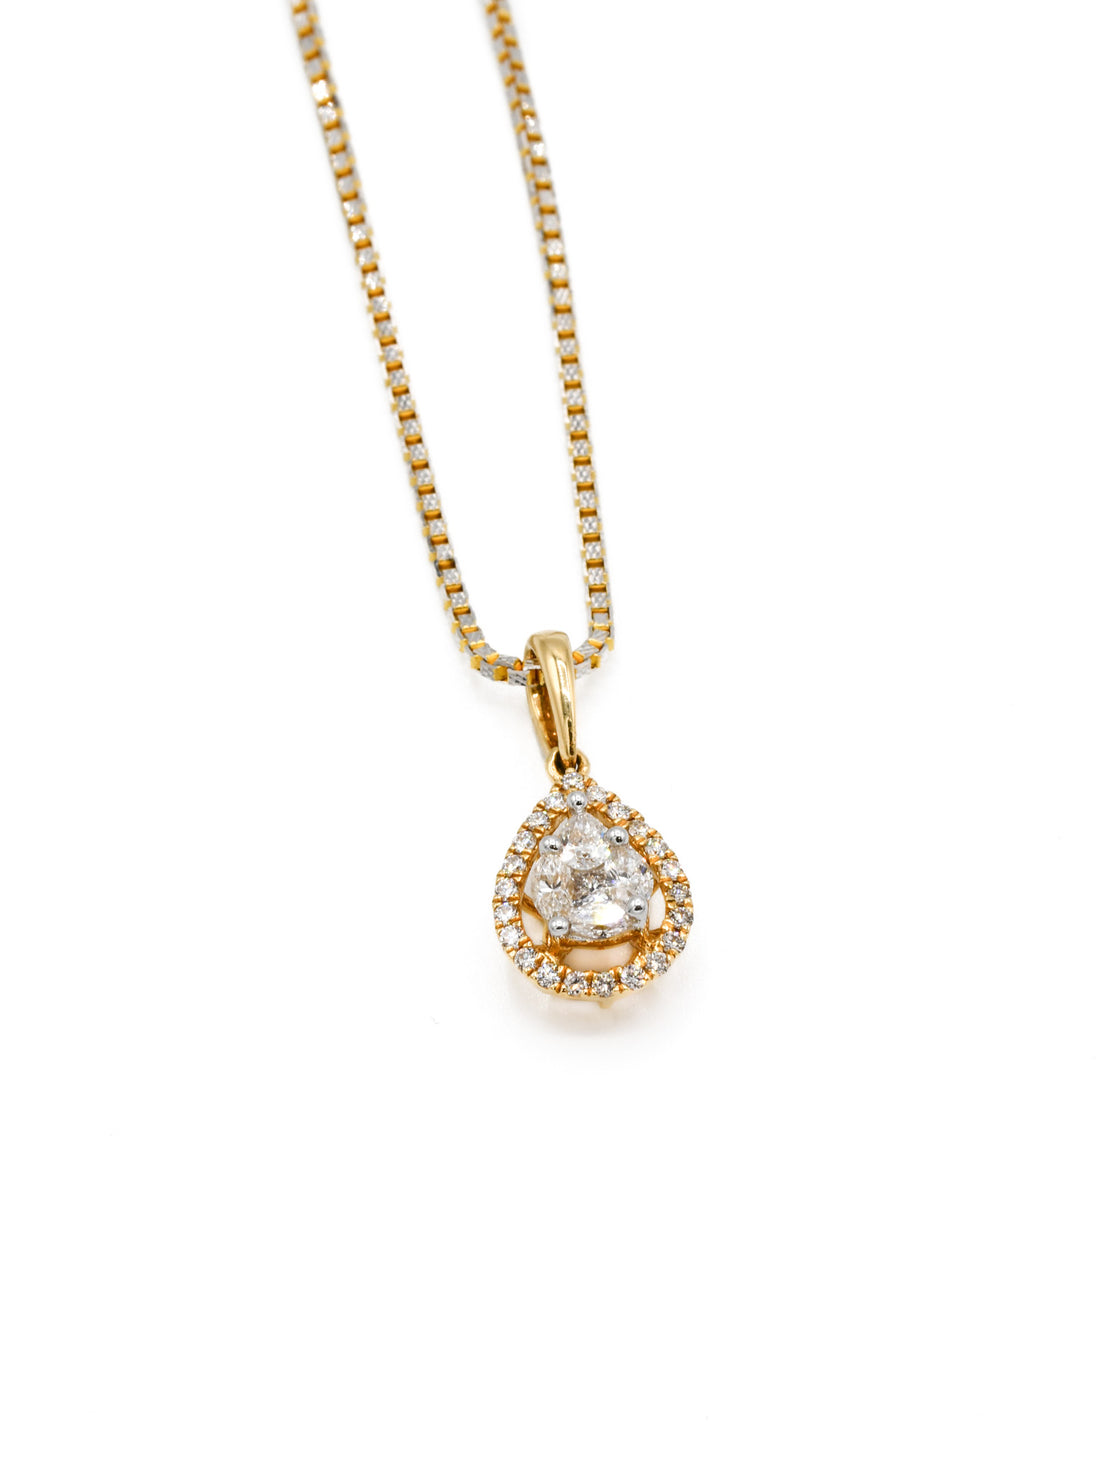 18ct Gold Diamond Pendant - 0.41 cts - Roop Darshan